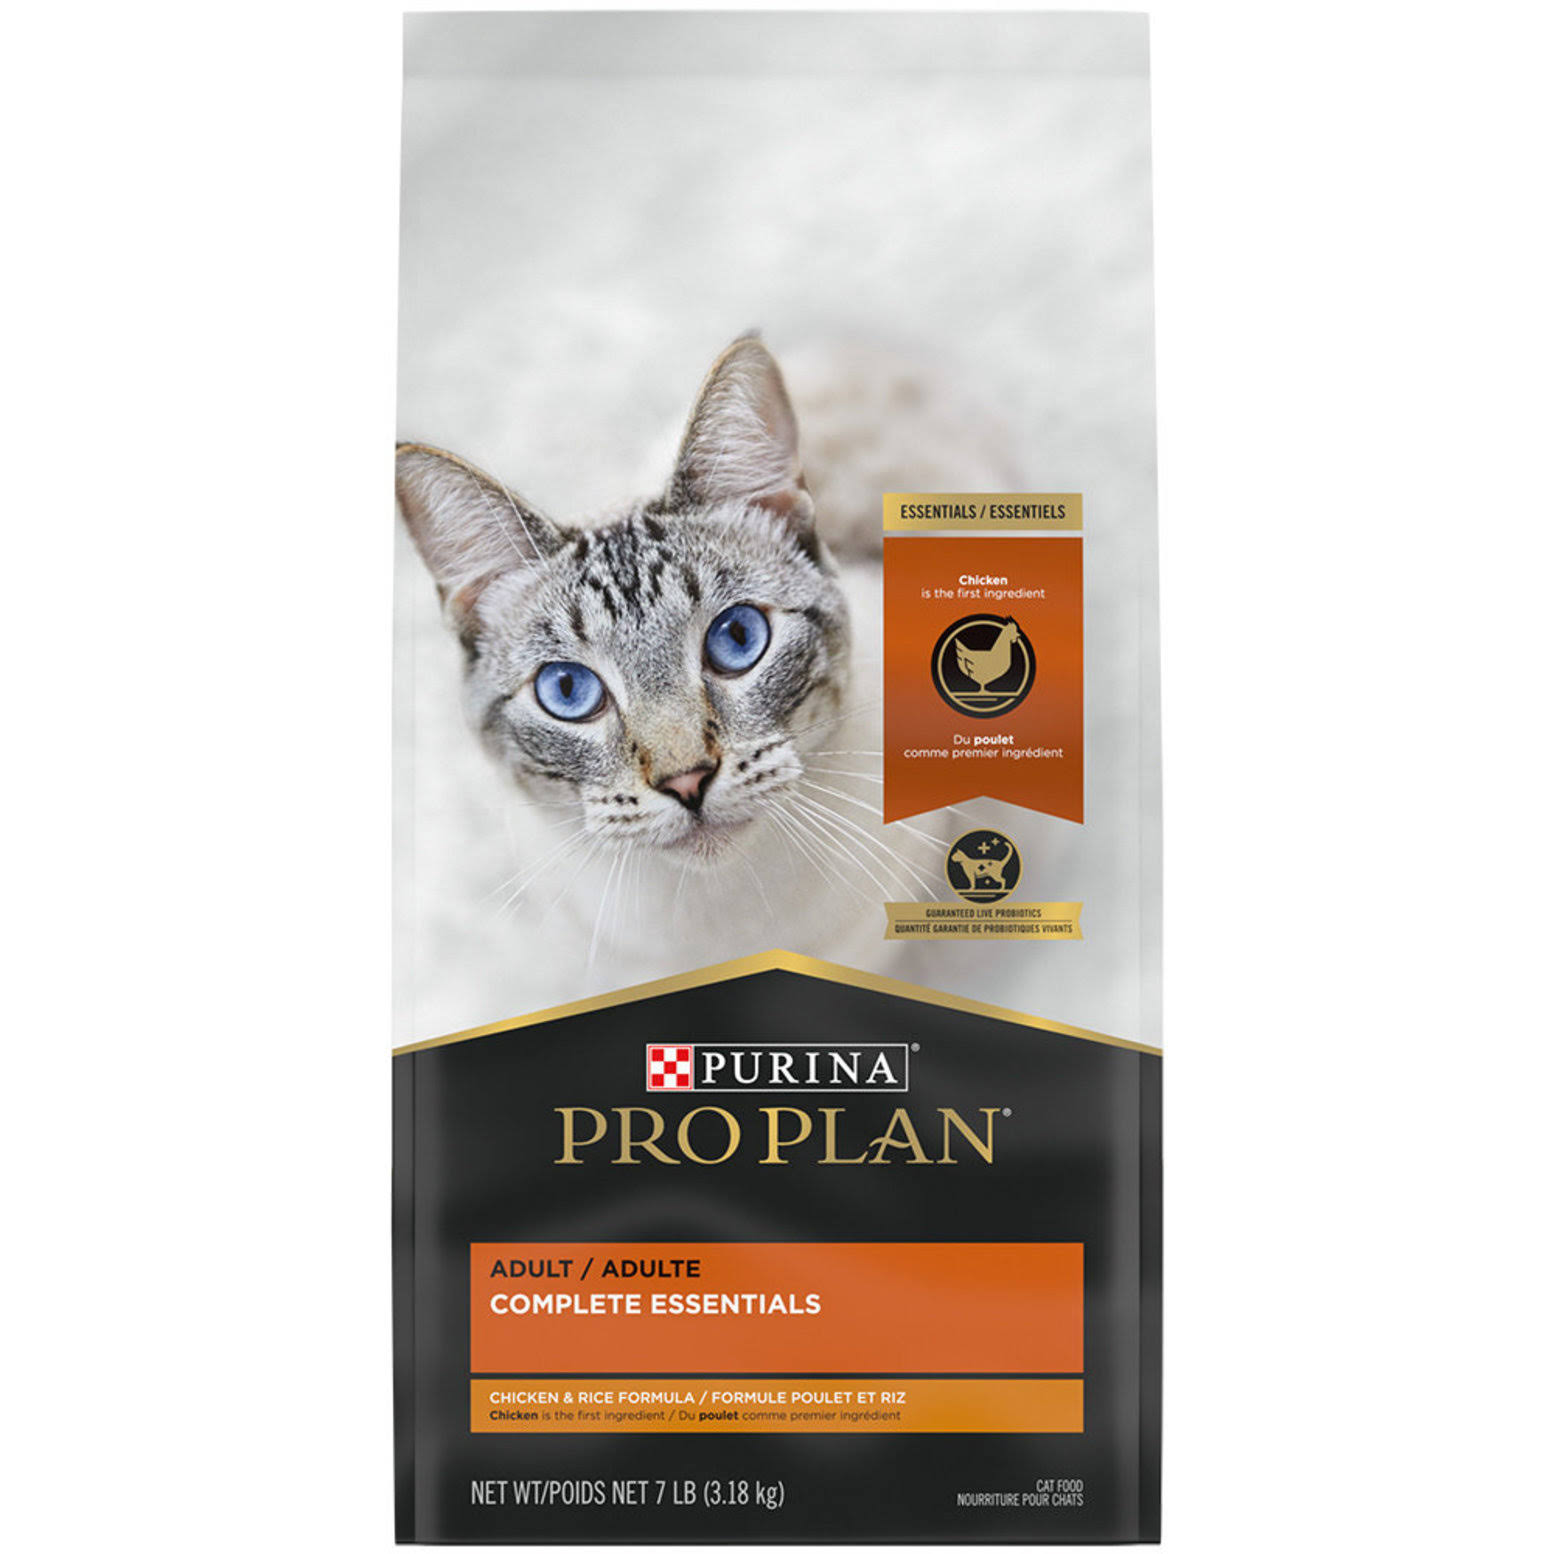 Purina Pro Plan Savor Adult Cat Food - Chicken & Rice Formula